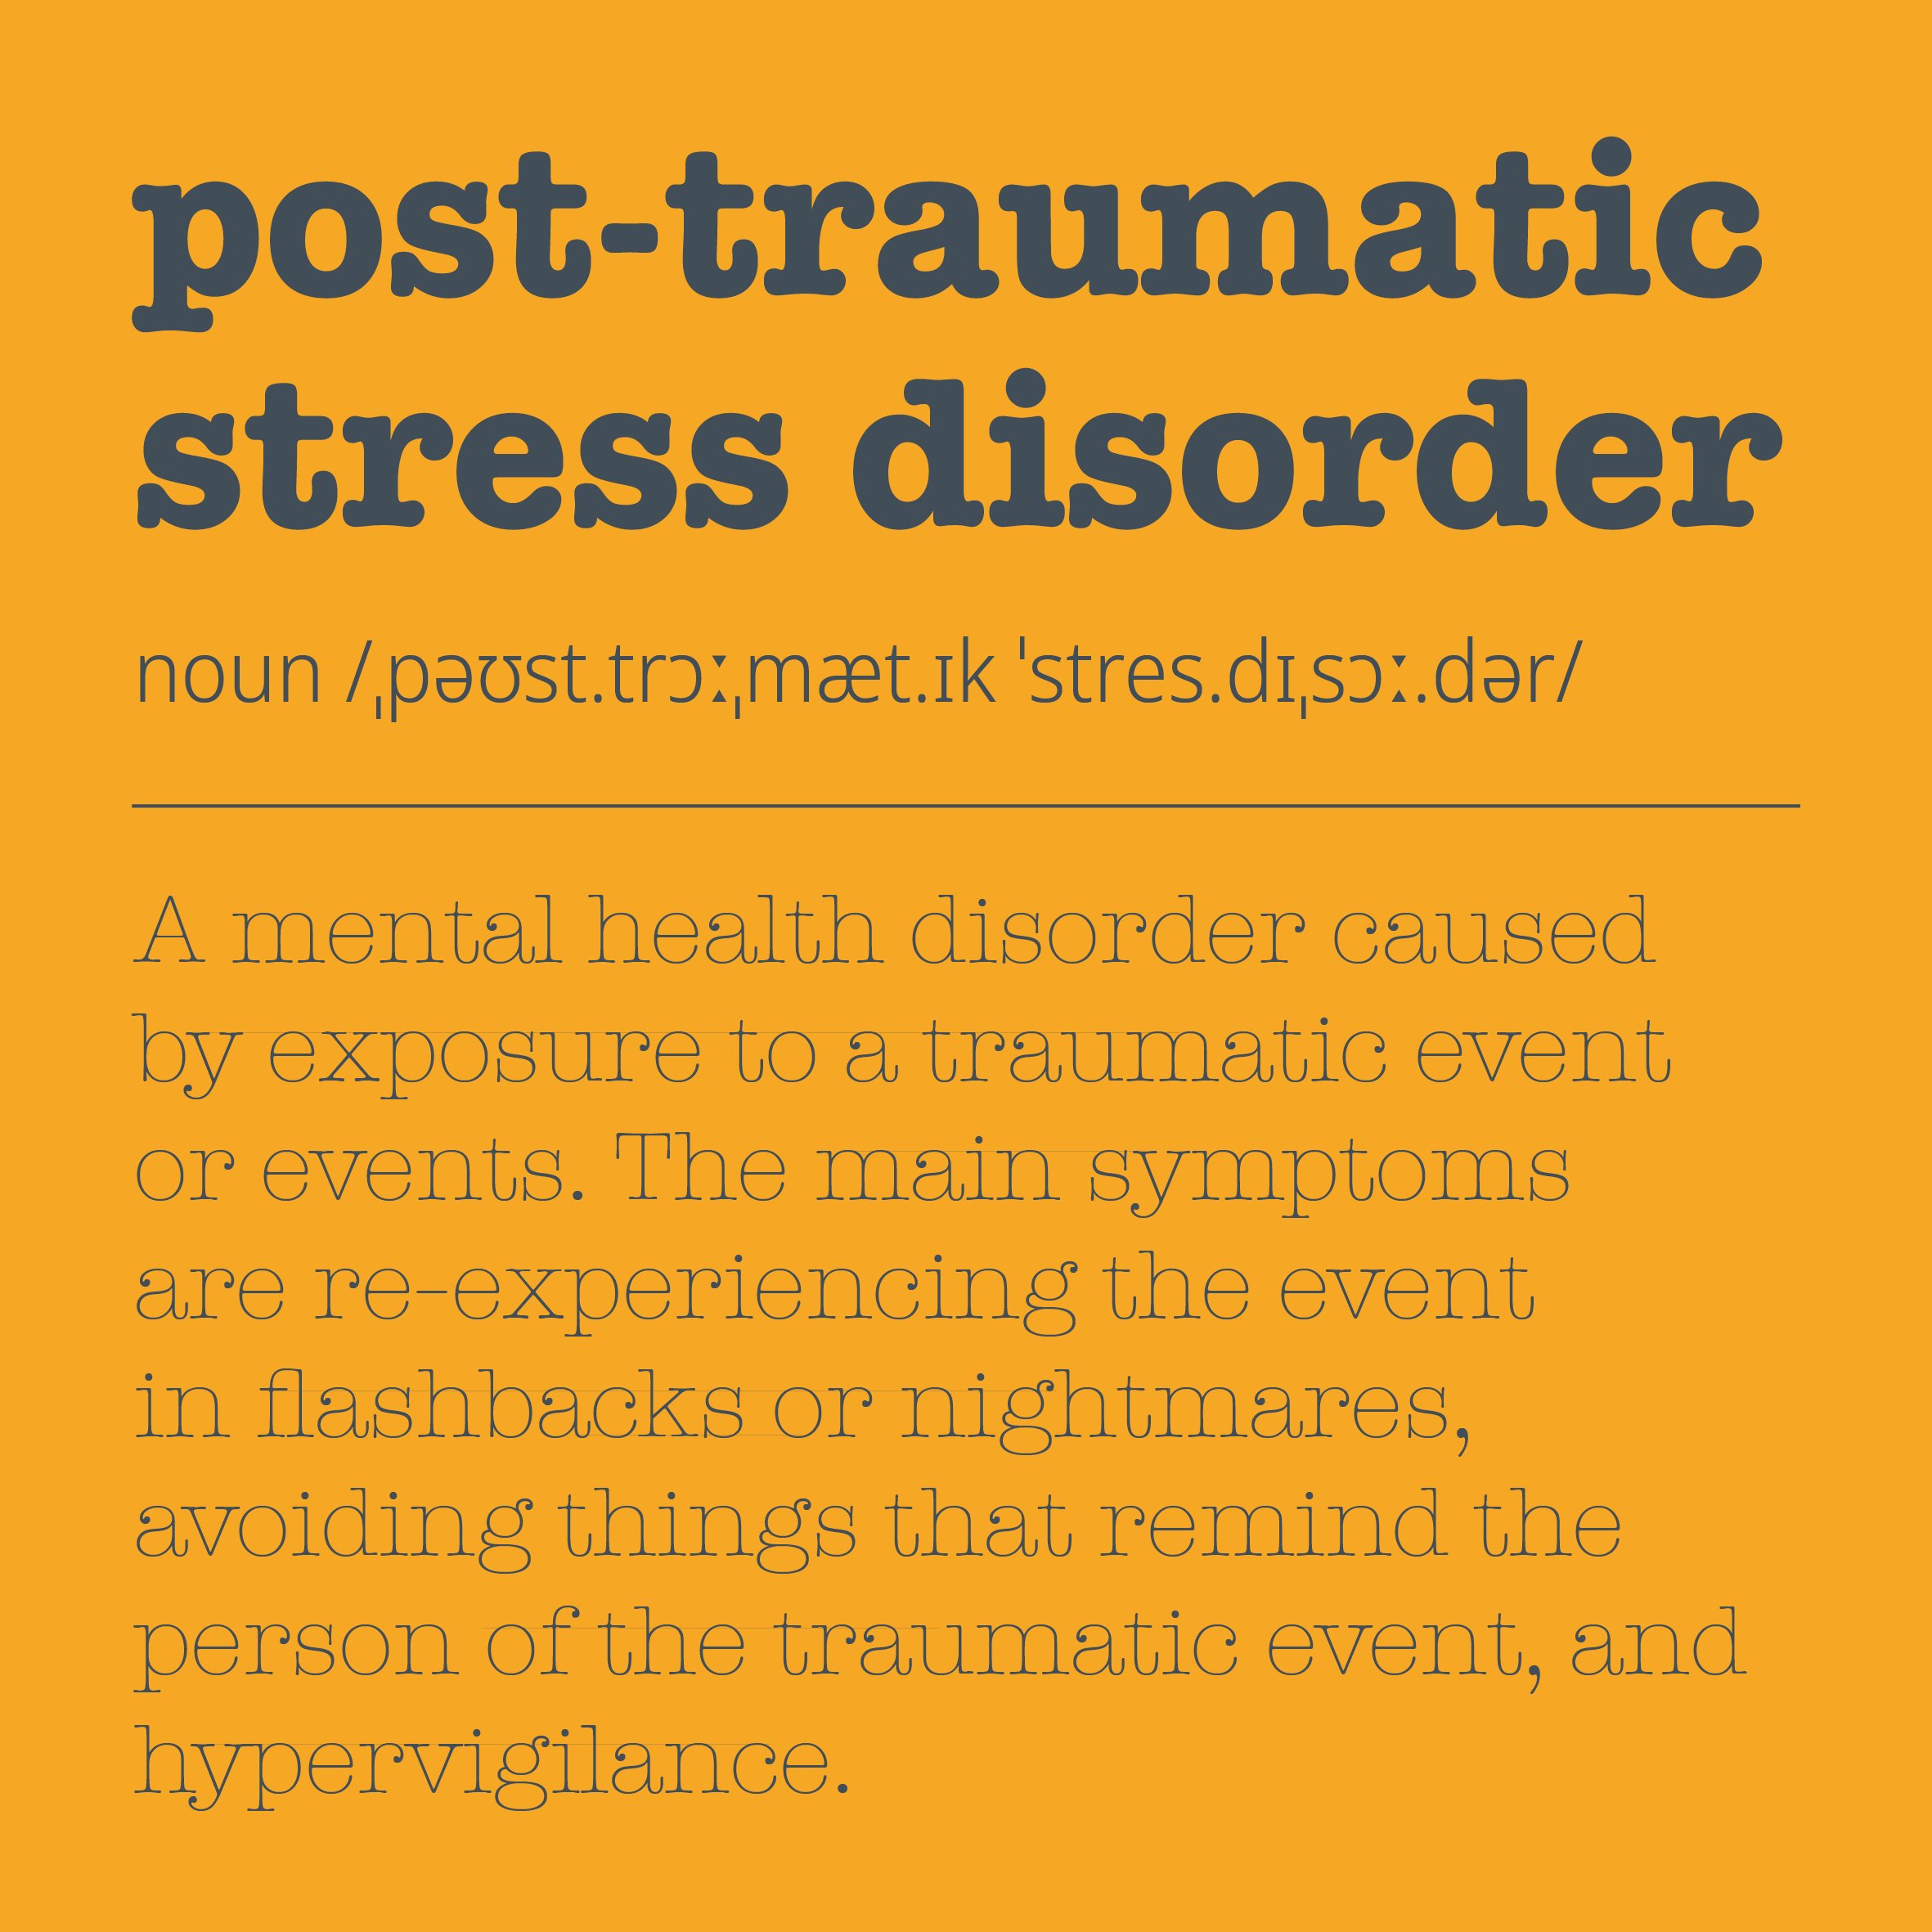 Post-Traumatic Stress Disorder.jpg